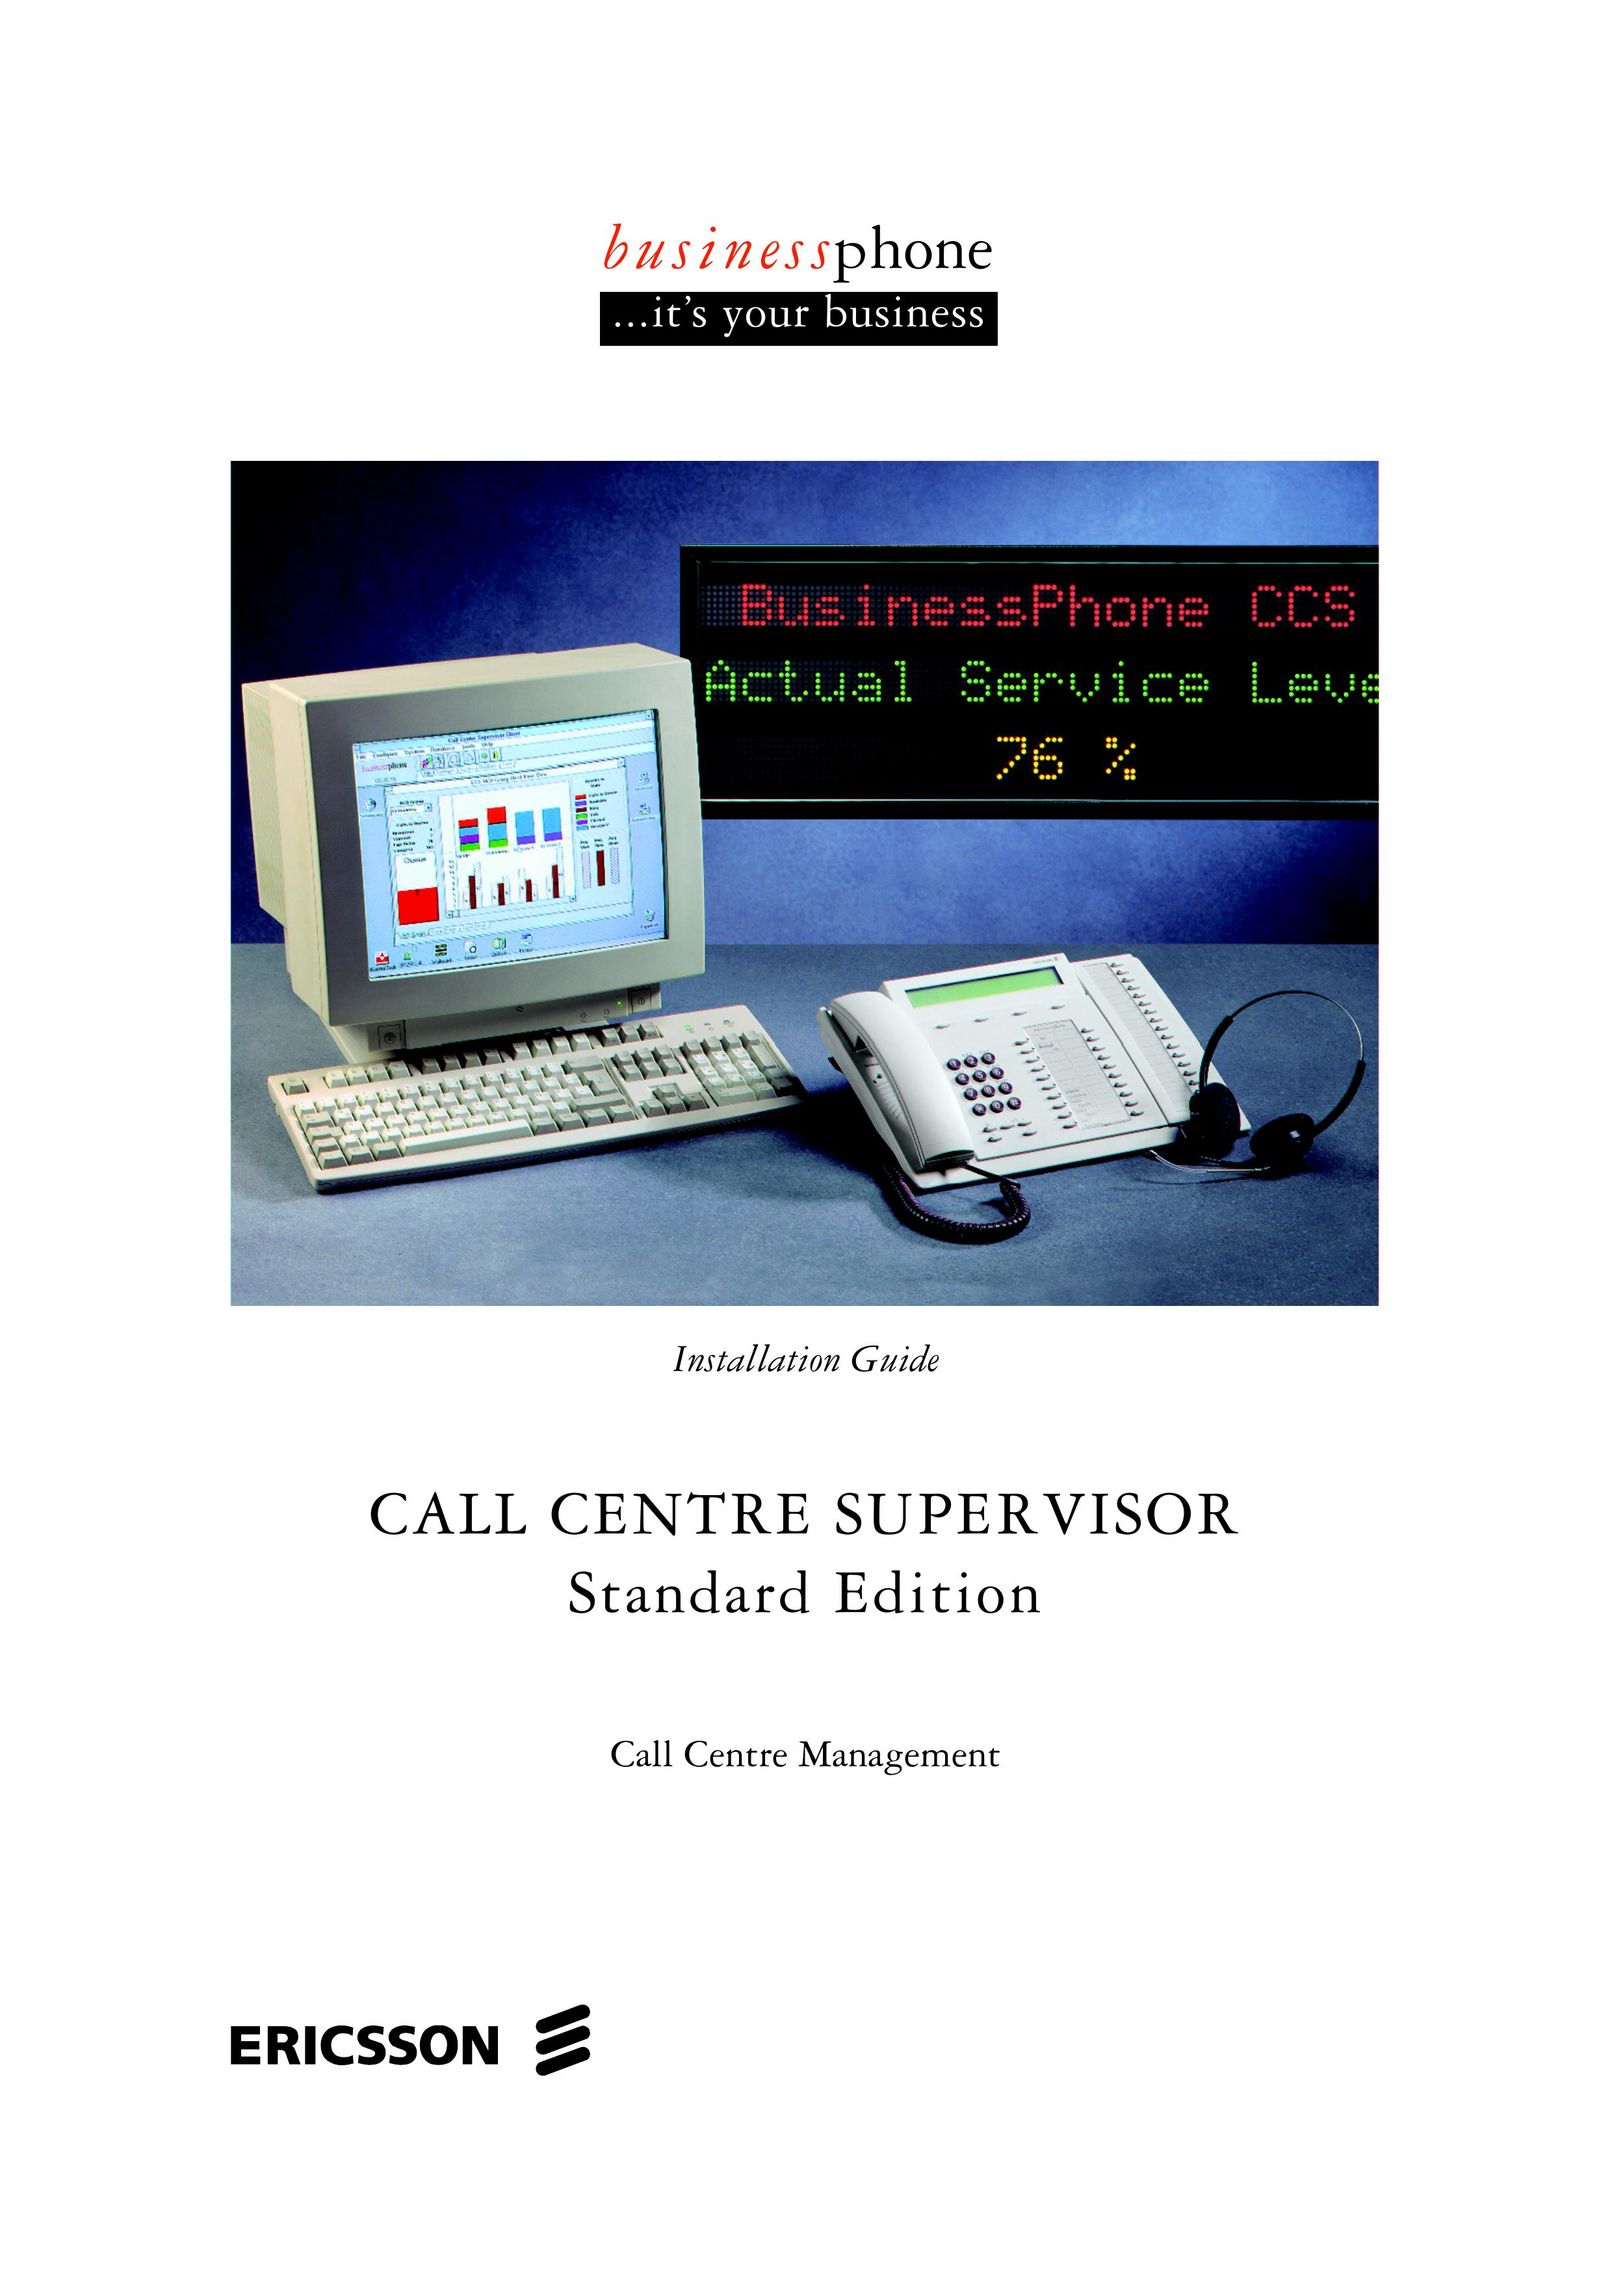 Ericsson BusinessPhone Telephone User Manual